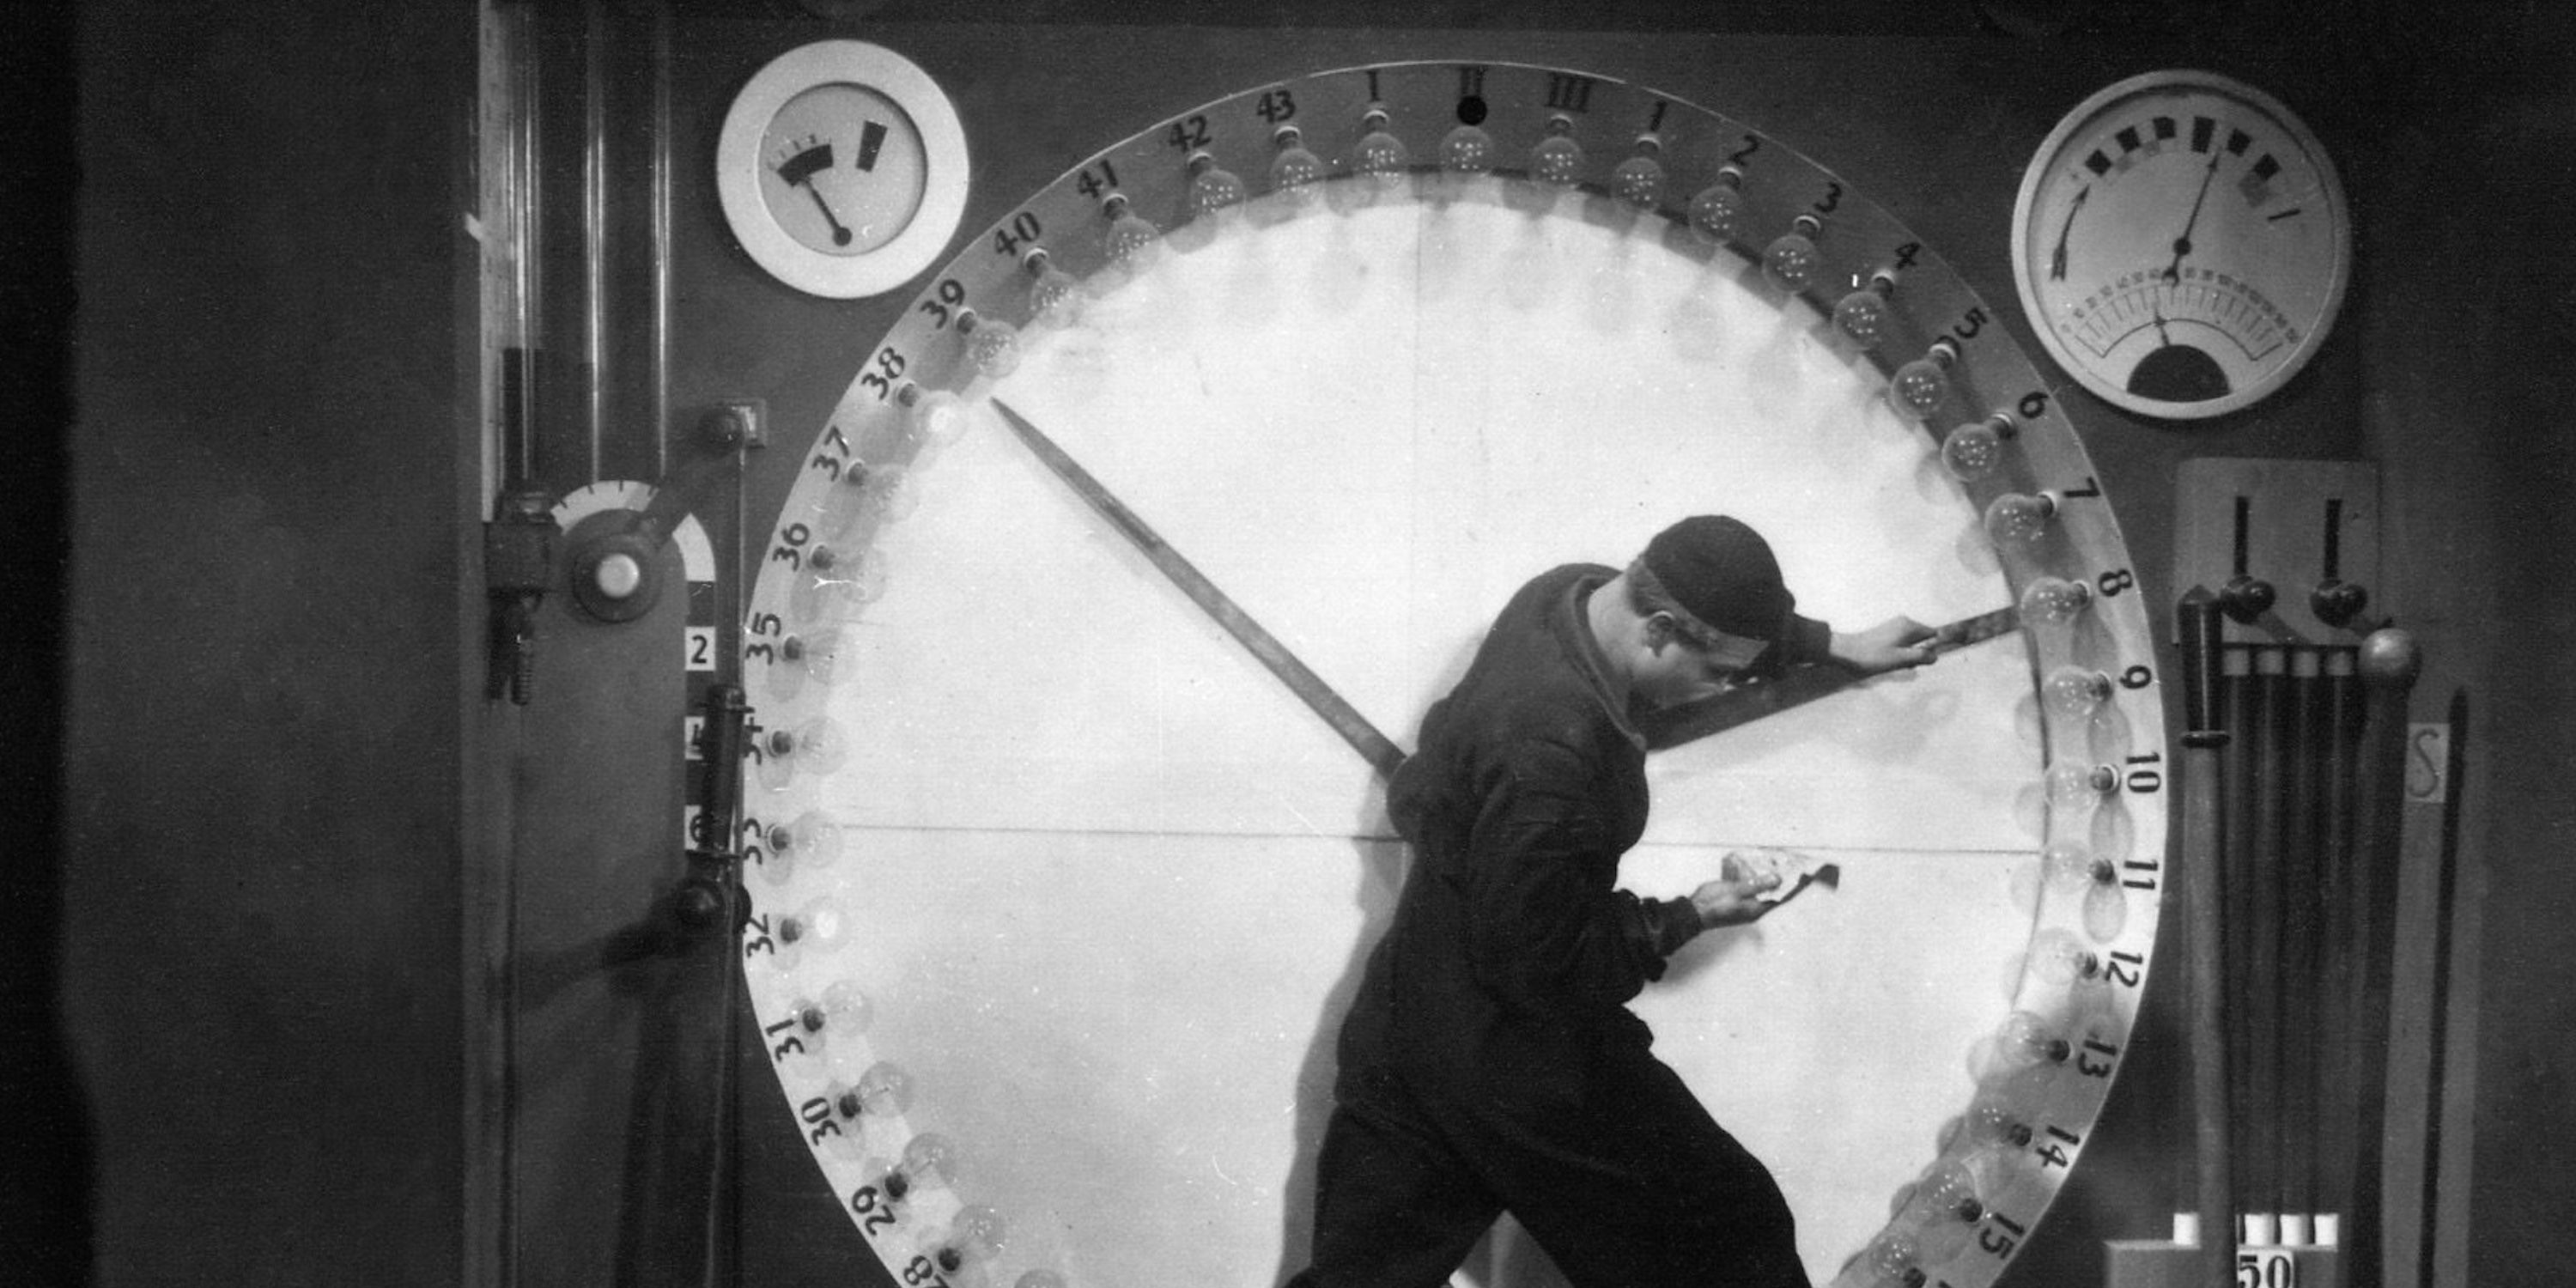 Metropolis (1927) Directed by Fritz Lang